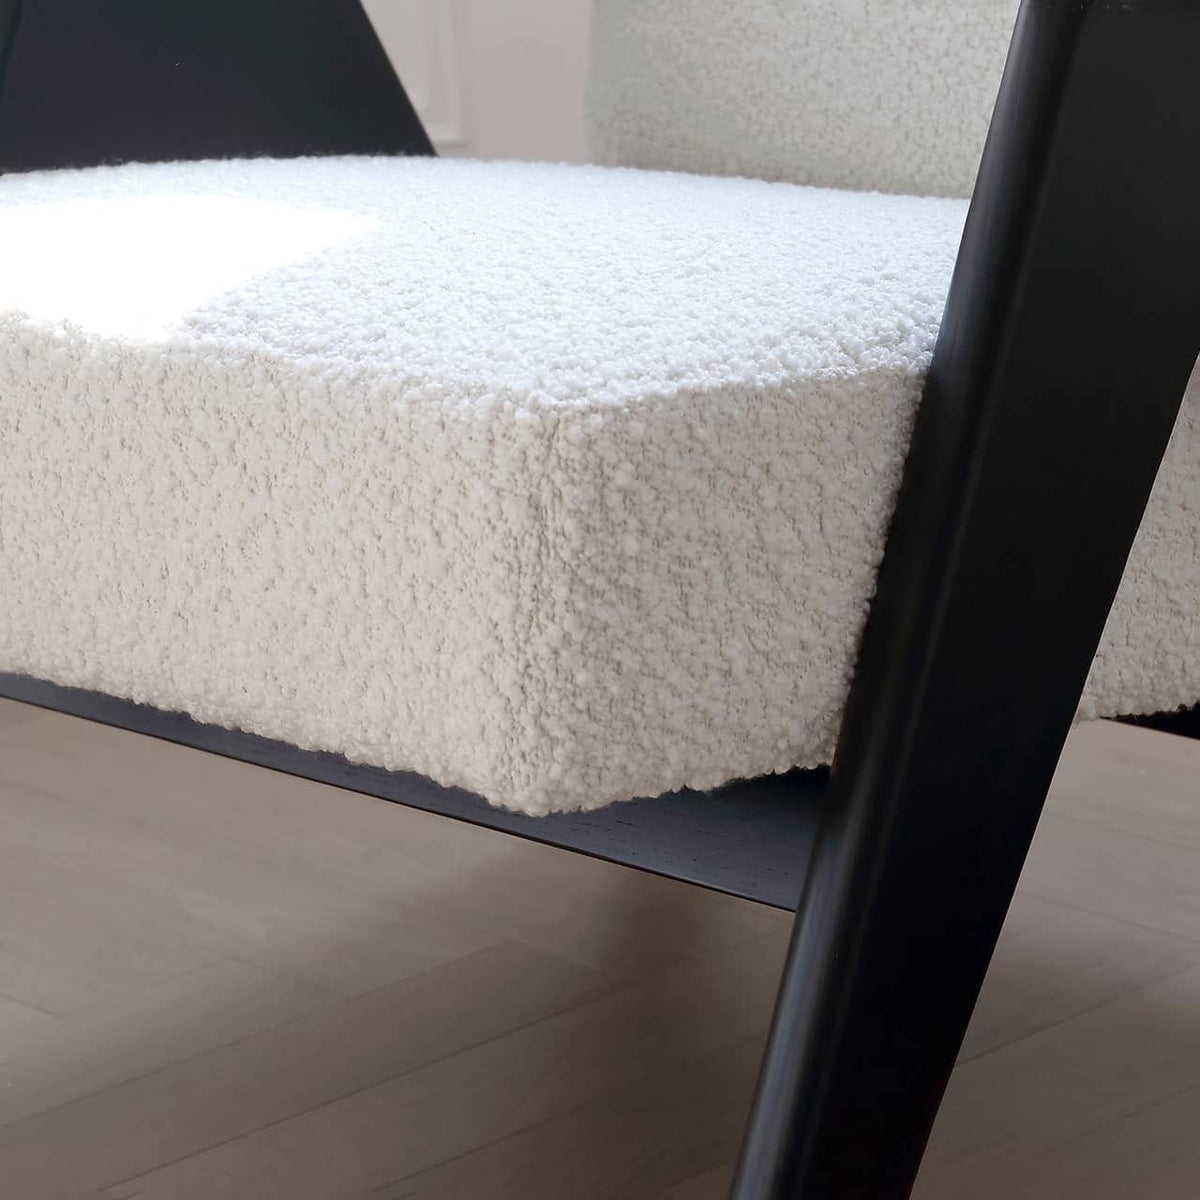 Premium White Ash Wood Chair - Elegant Design & Superior Durability my-384